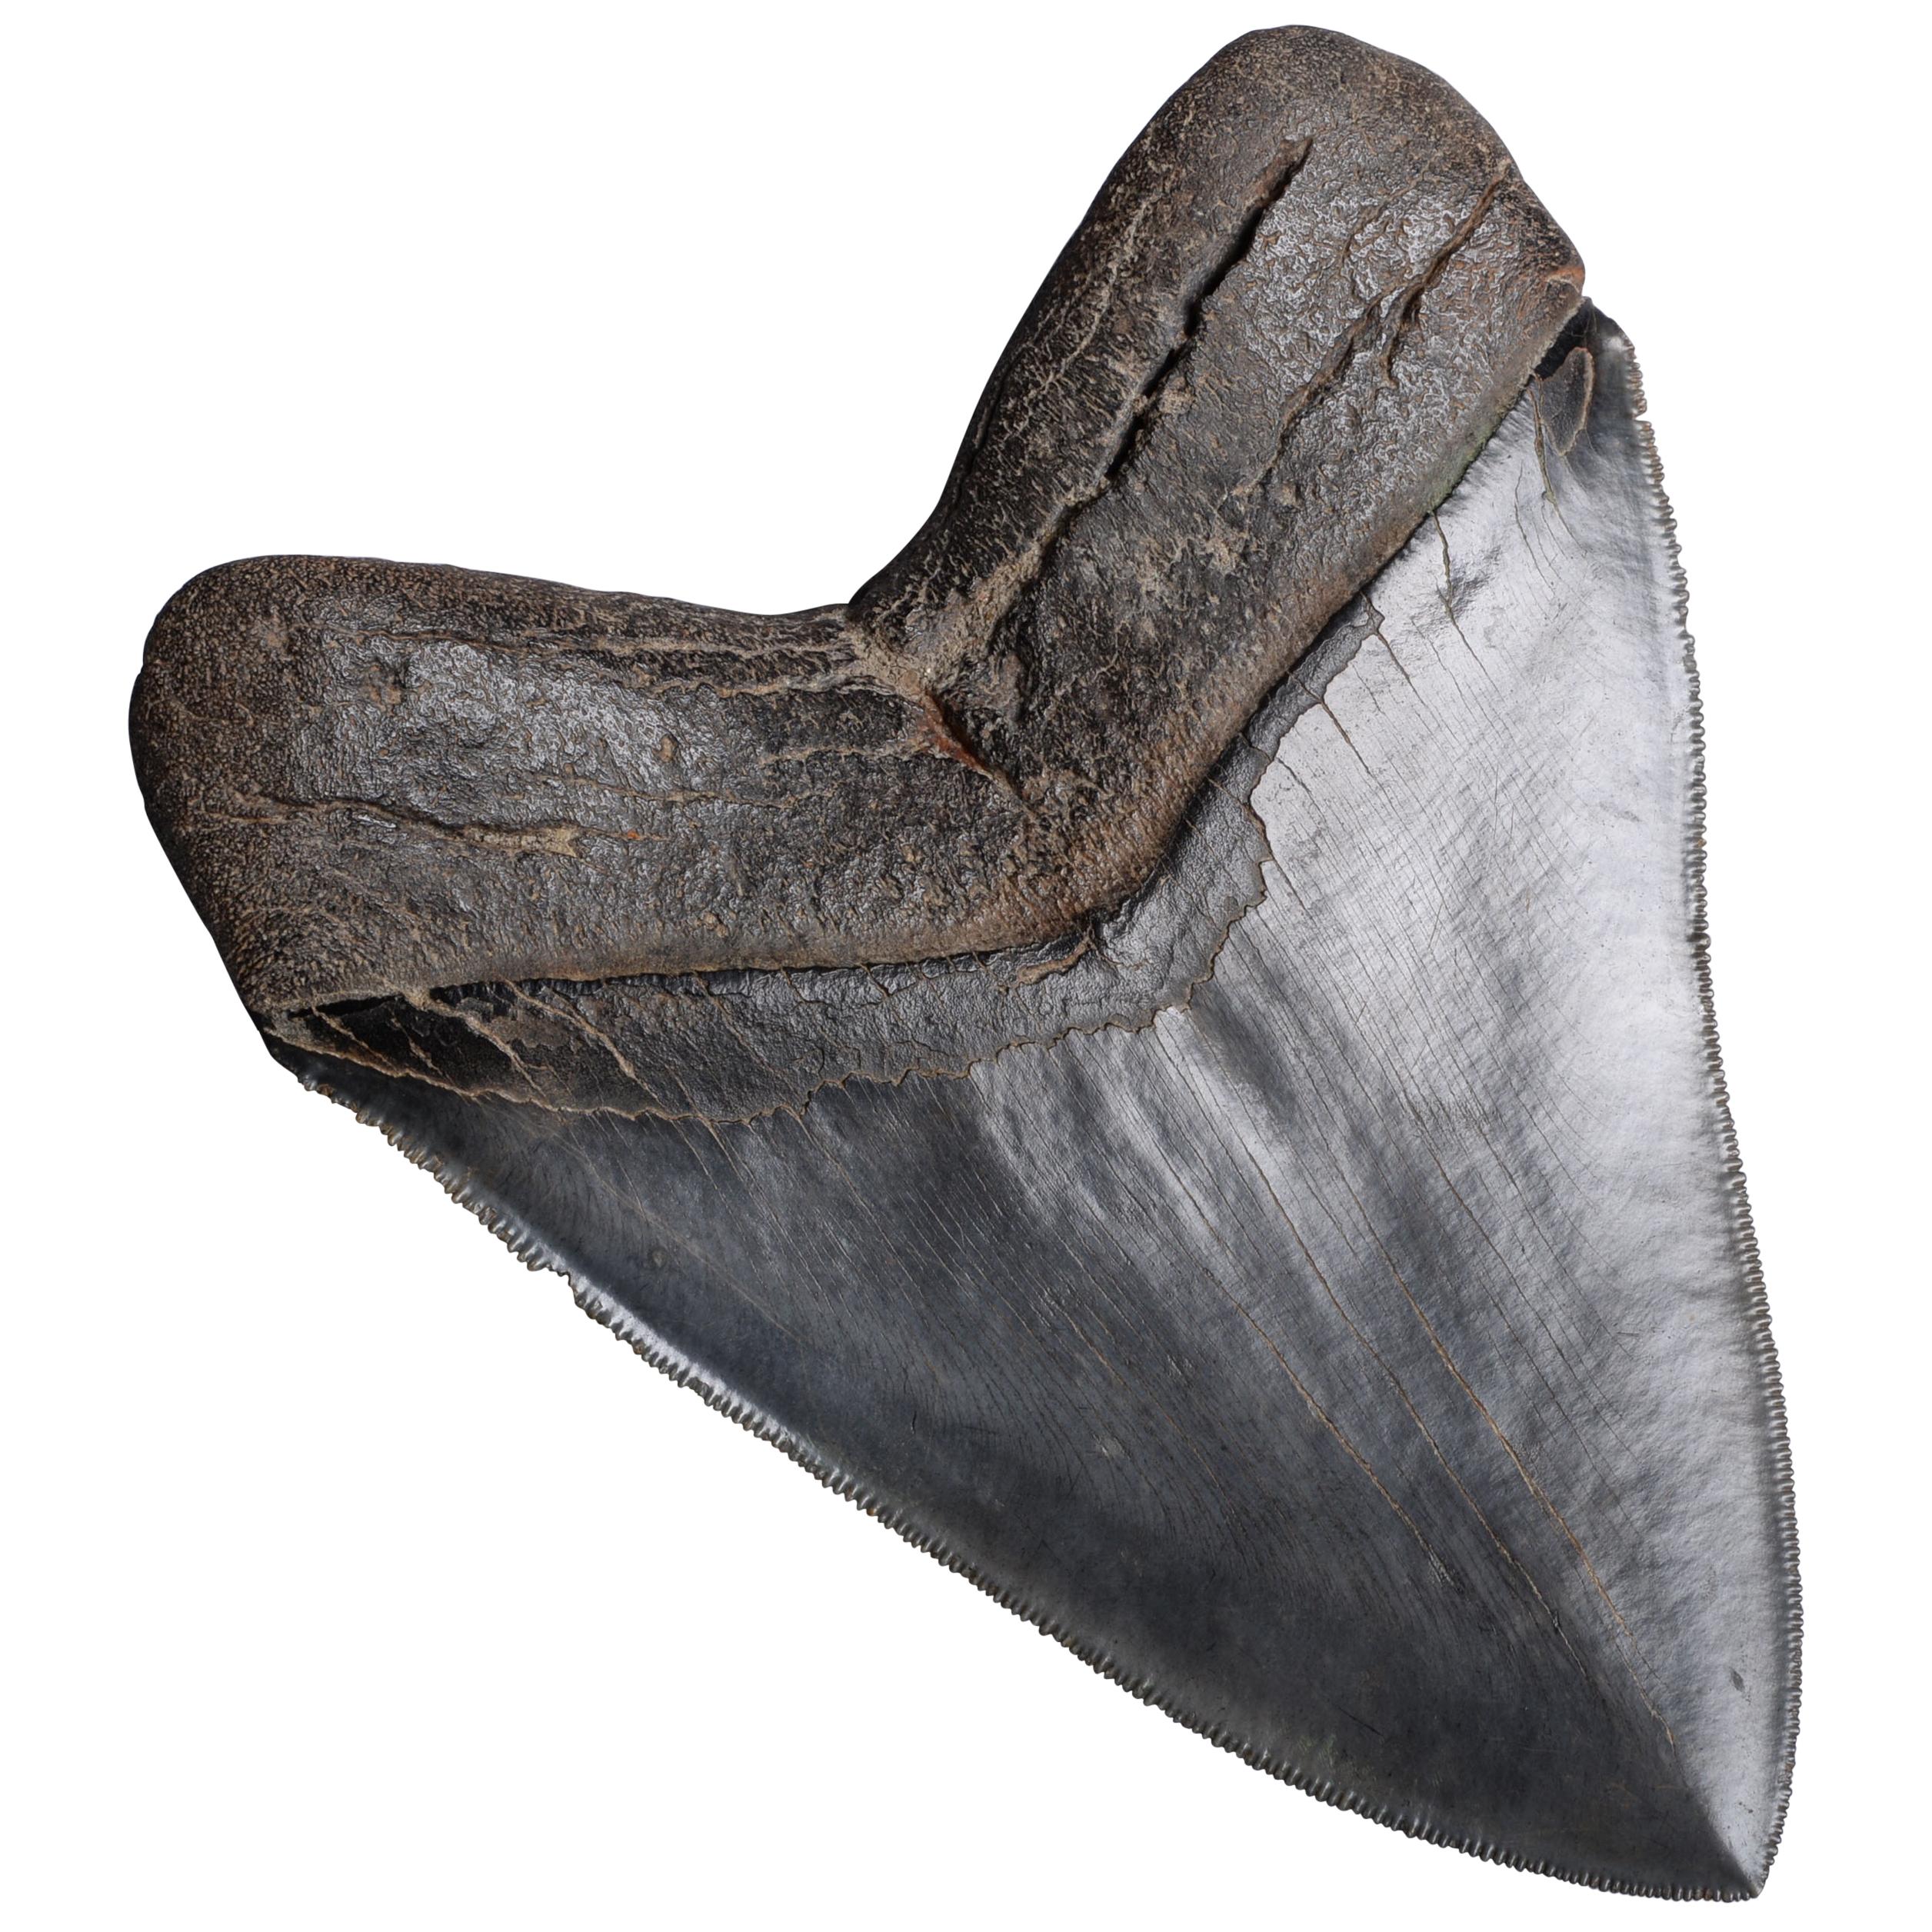 Huge Pristine Megalodon Tooth, Prehistoric Shark Fossil